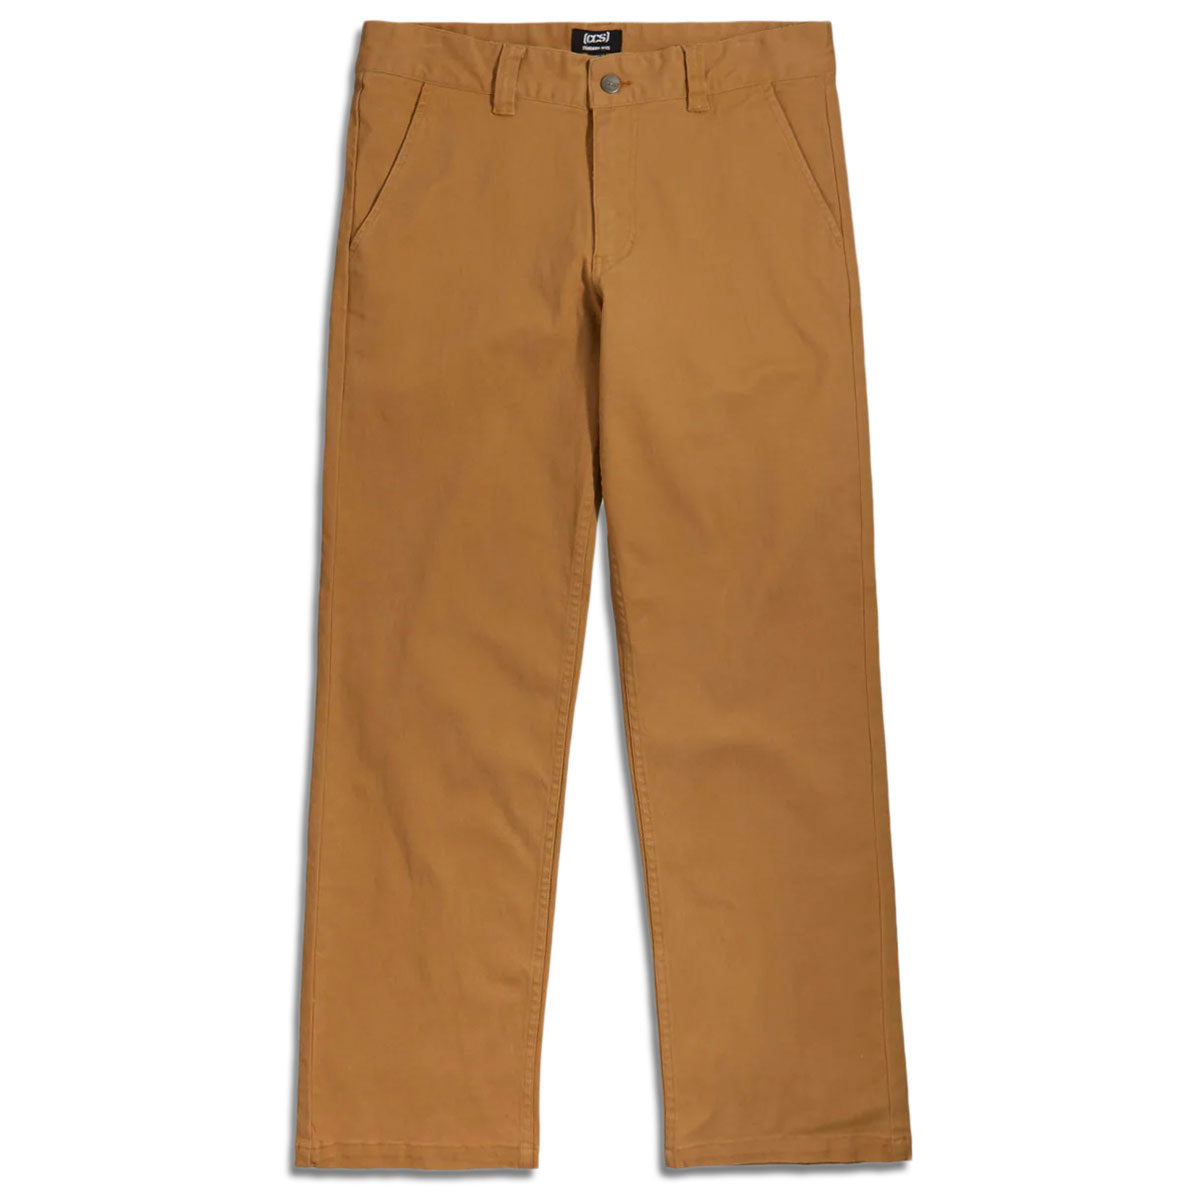 CCS Standard Plus Relaxed Chino Pants - Khaki image 5